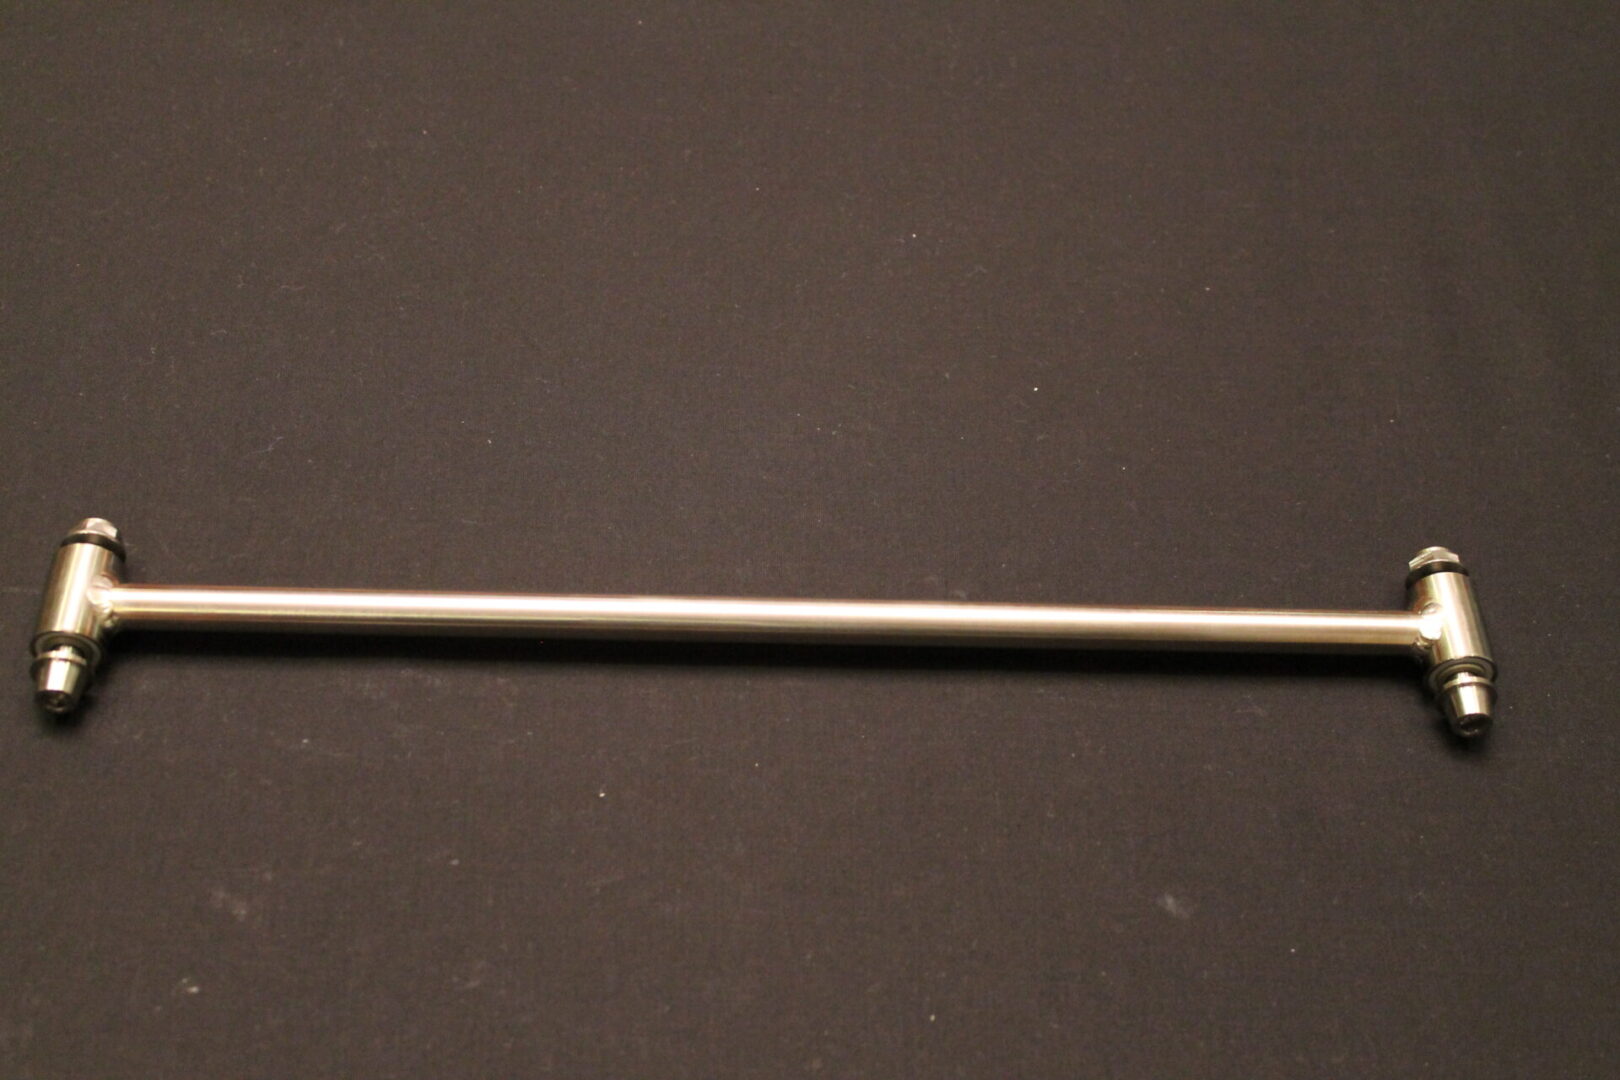 An 11-15 Pro Titanium Shock Rod w/ HCT Coated Alum. Bushings on a black surface.